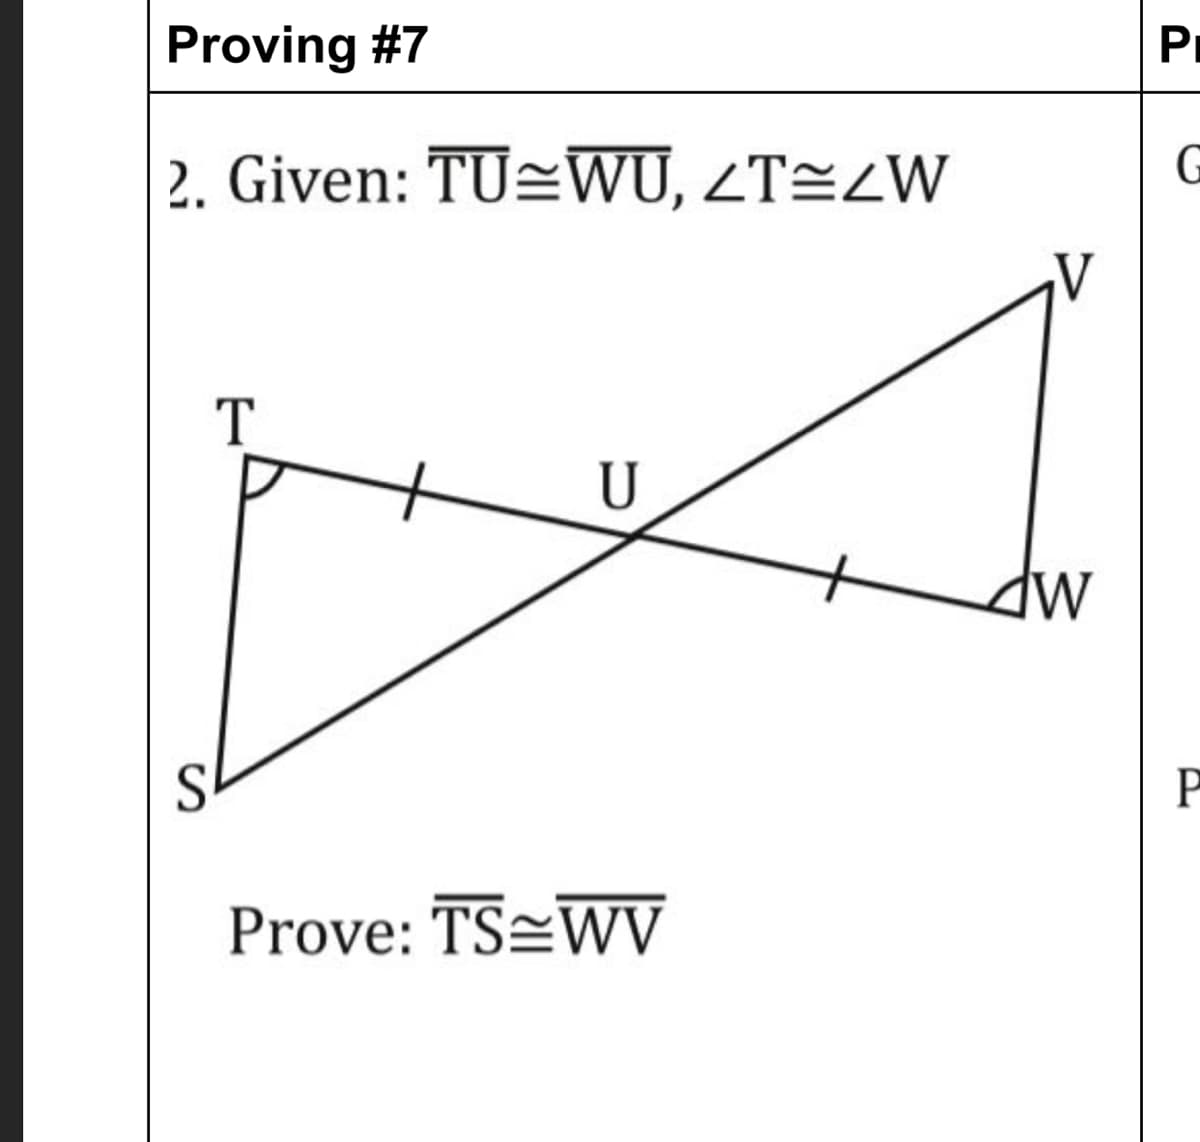 Proving #7
Pr
2. Given: TU=WU, ZT=LW
G
U
Prove: TS WV
